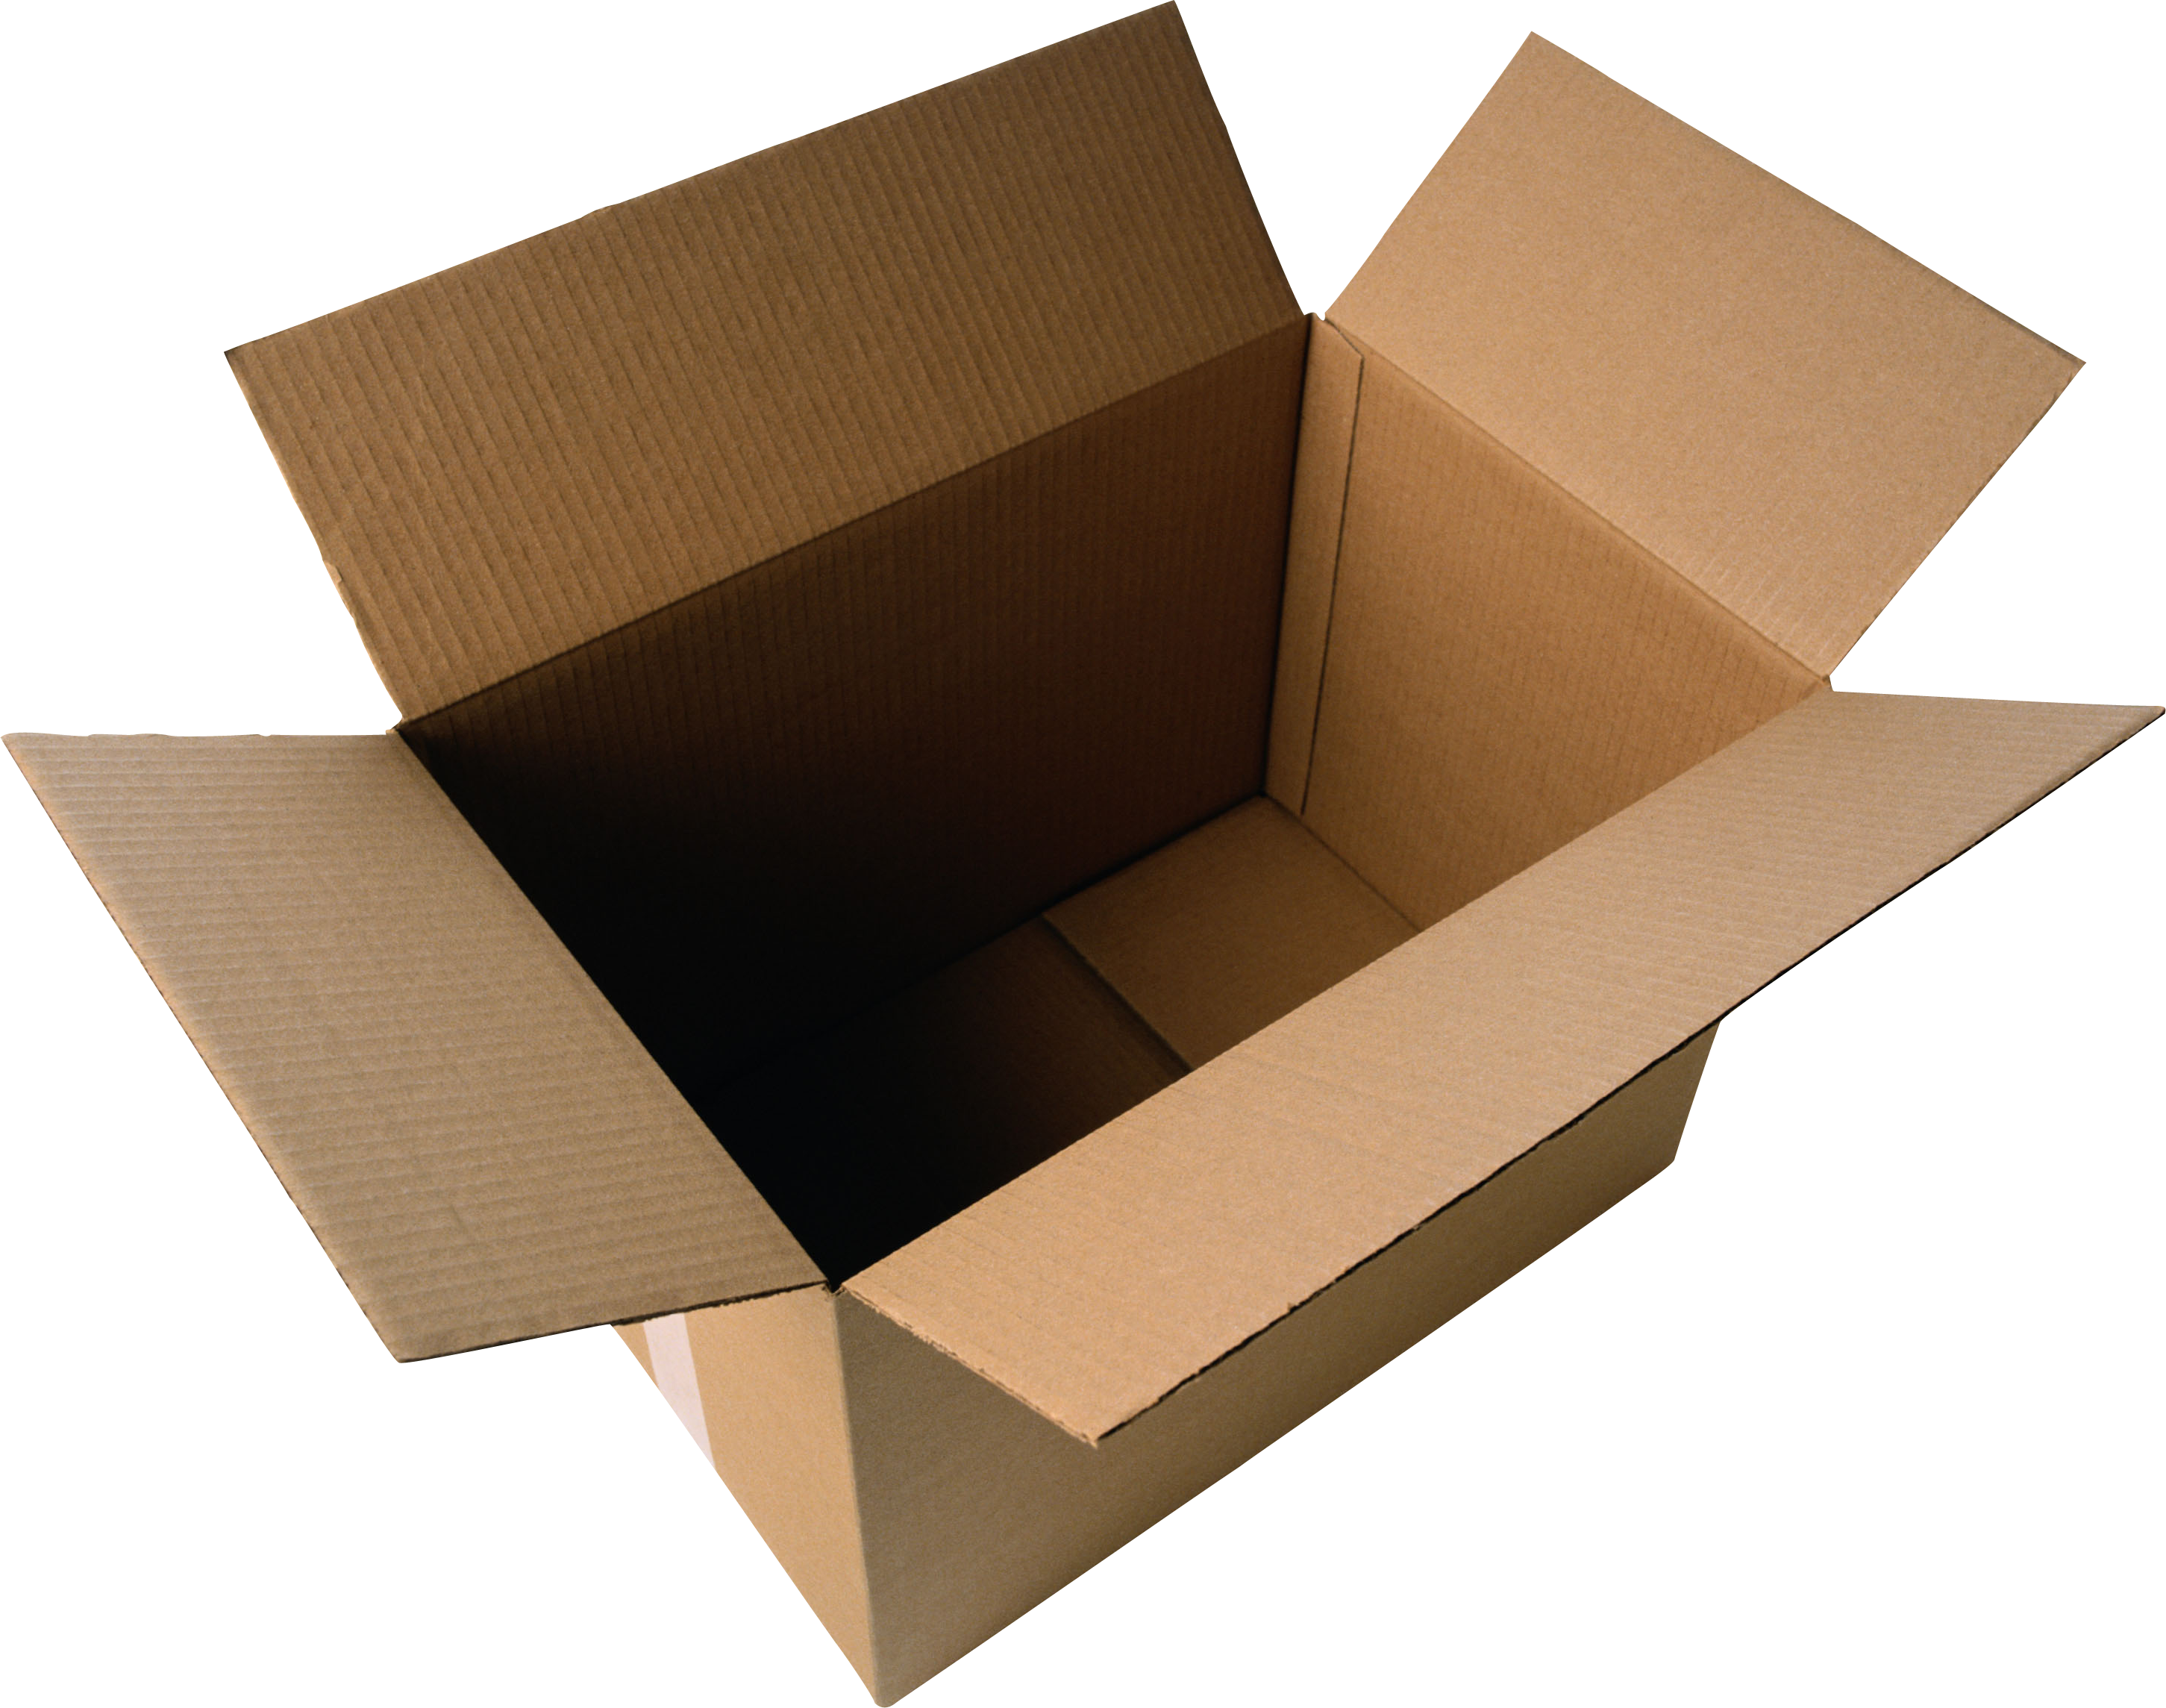 open cardboard box png